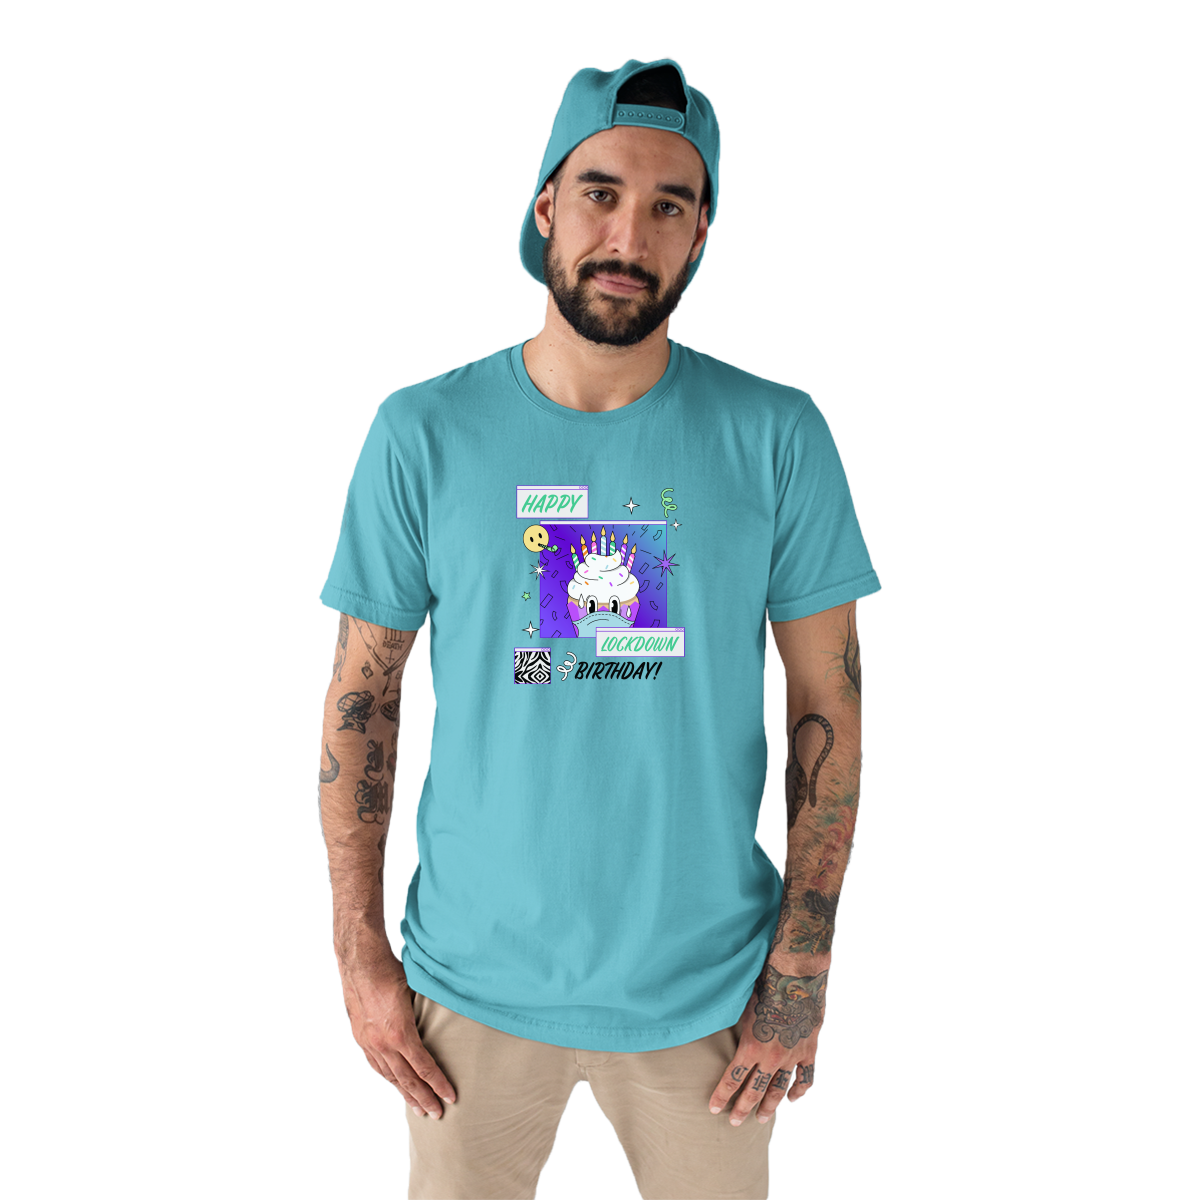 Happy Lock-down Birthday Men's T-shirt | Turquoise